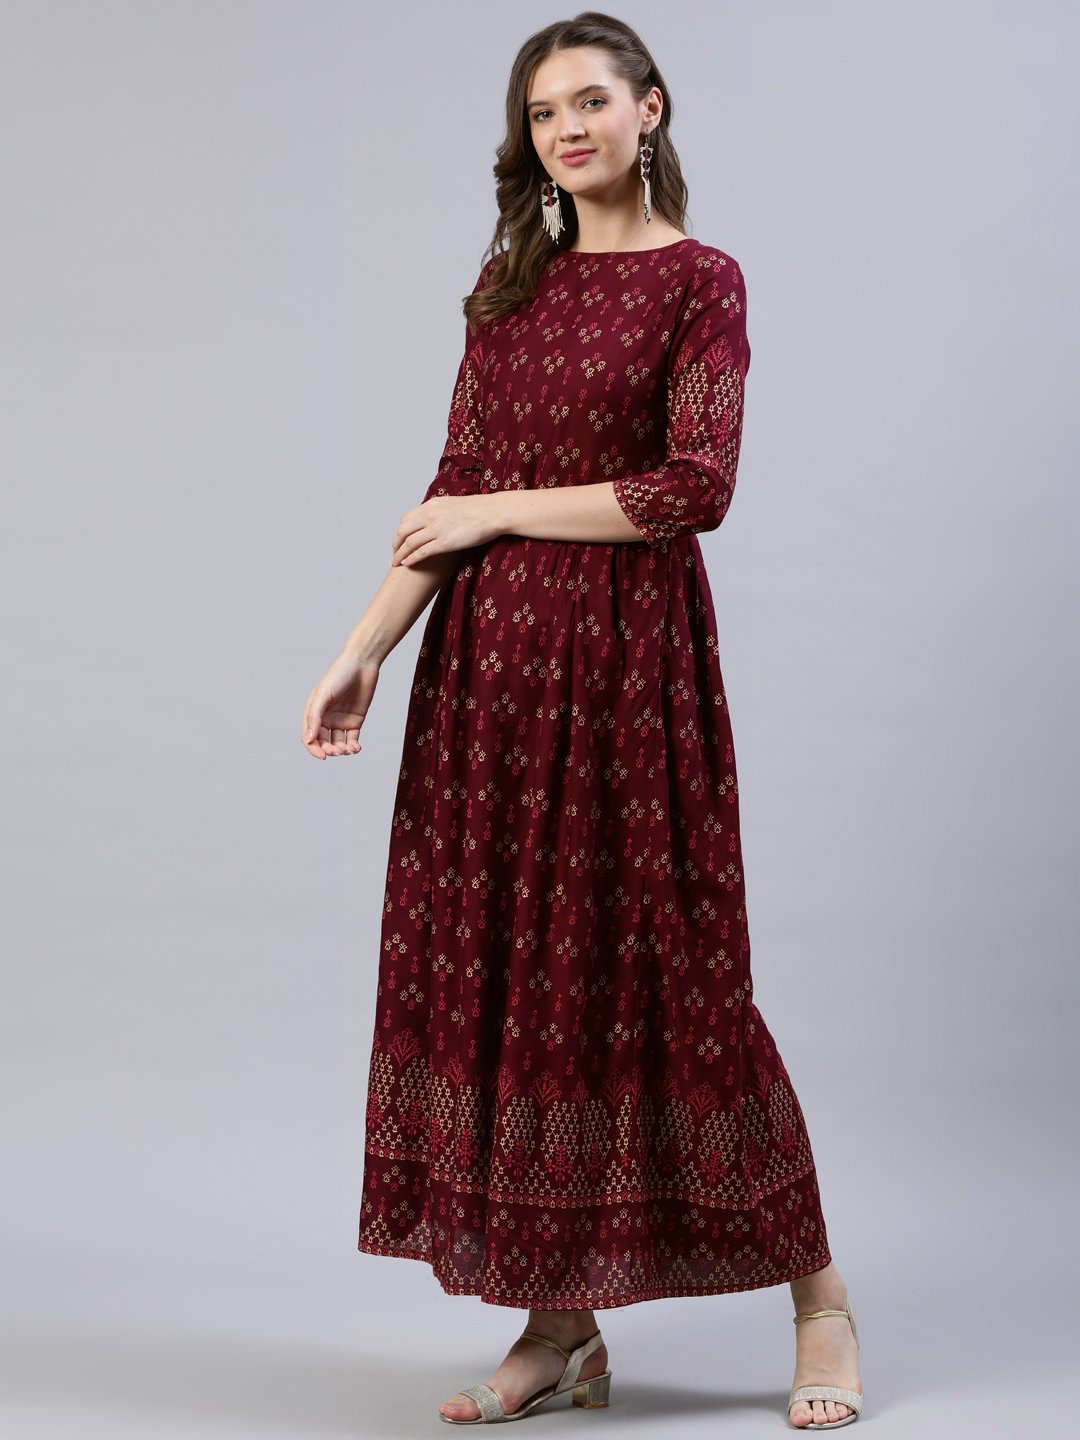 Women's Burgundy Printed Dress With Three Quarter Sleeves - Nayo Clothing USA